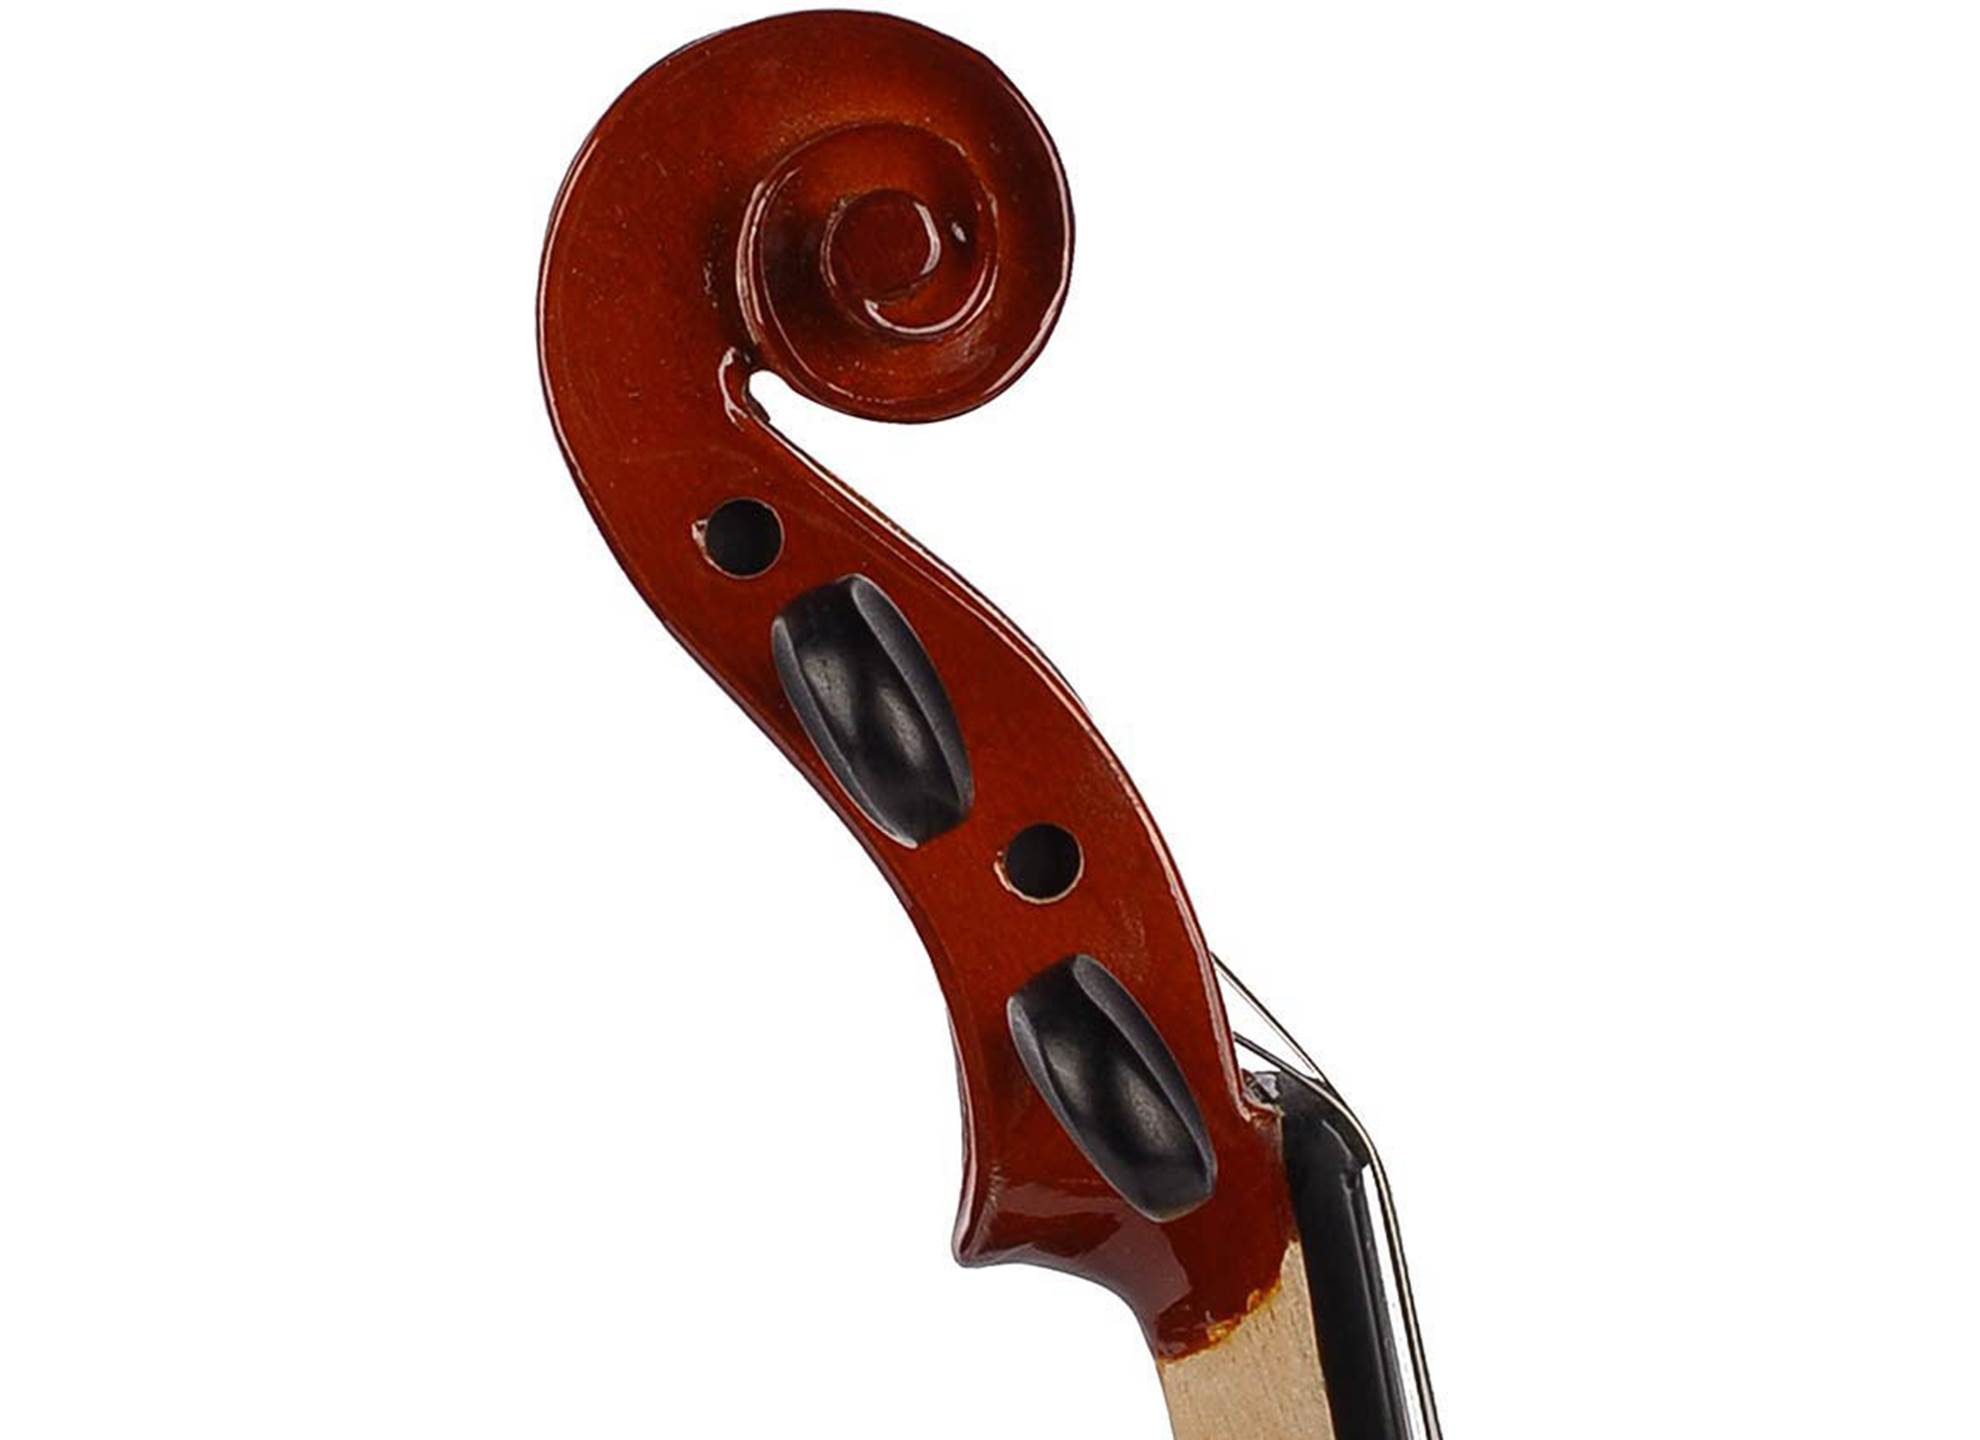 LV-1534 Violin Set Natural 3/4